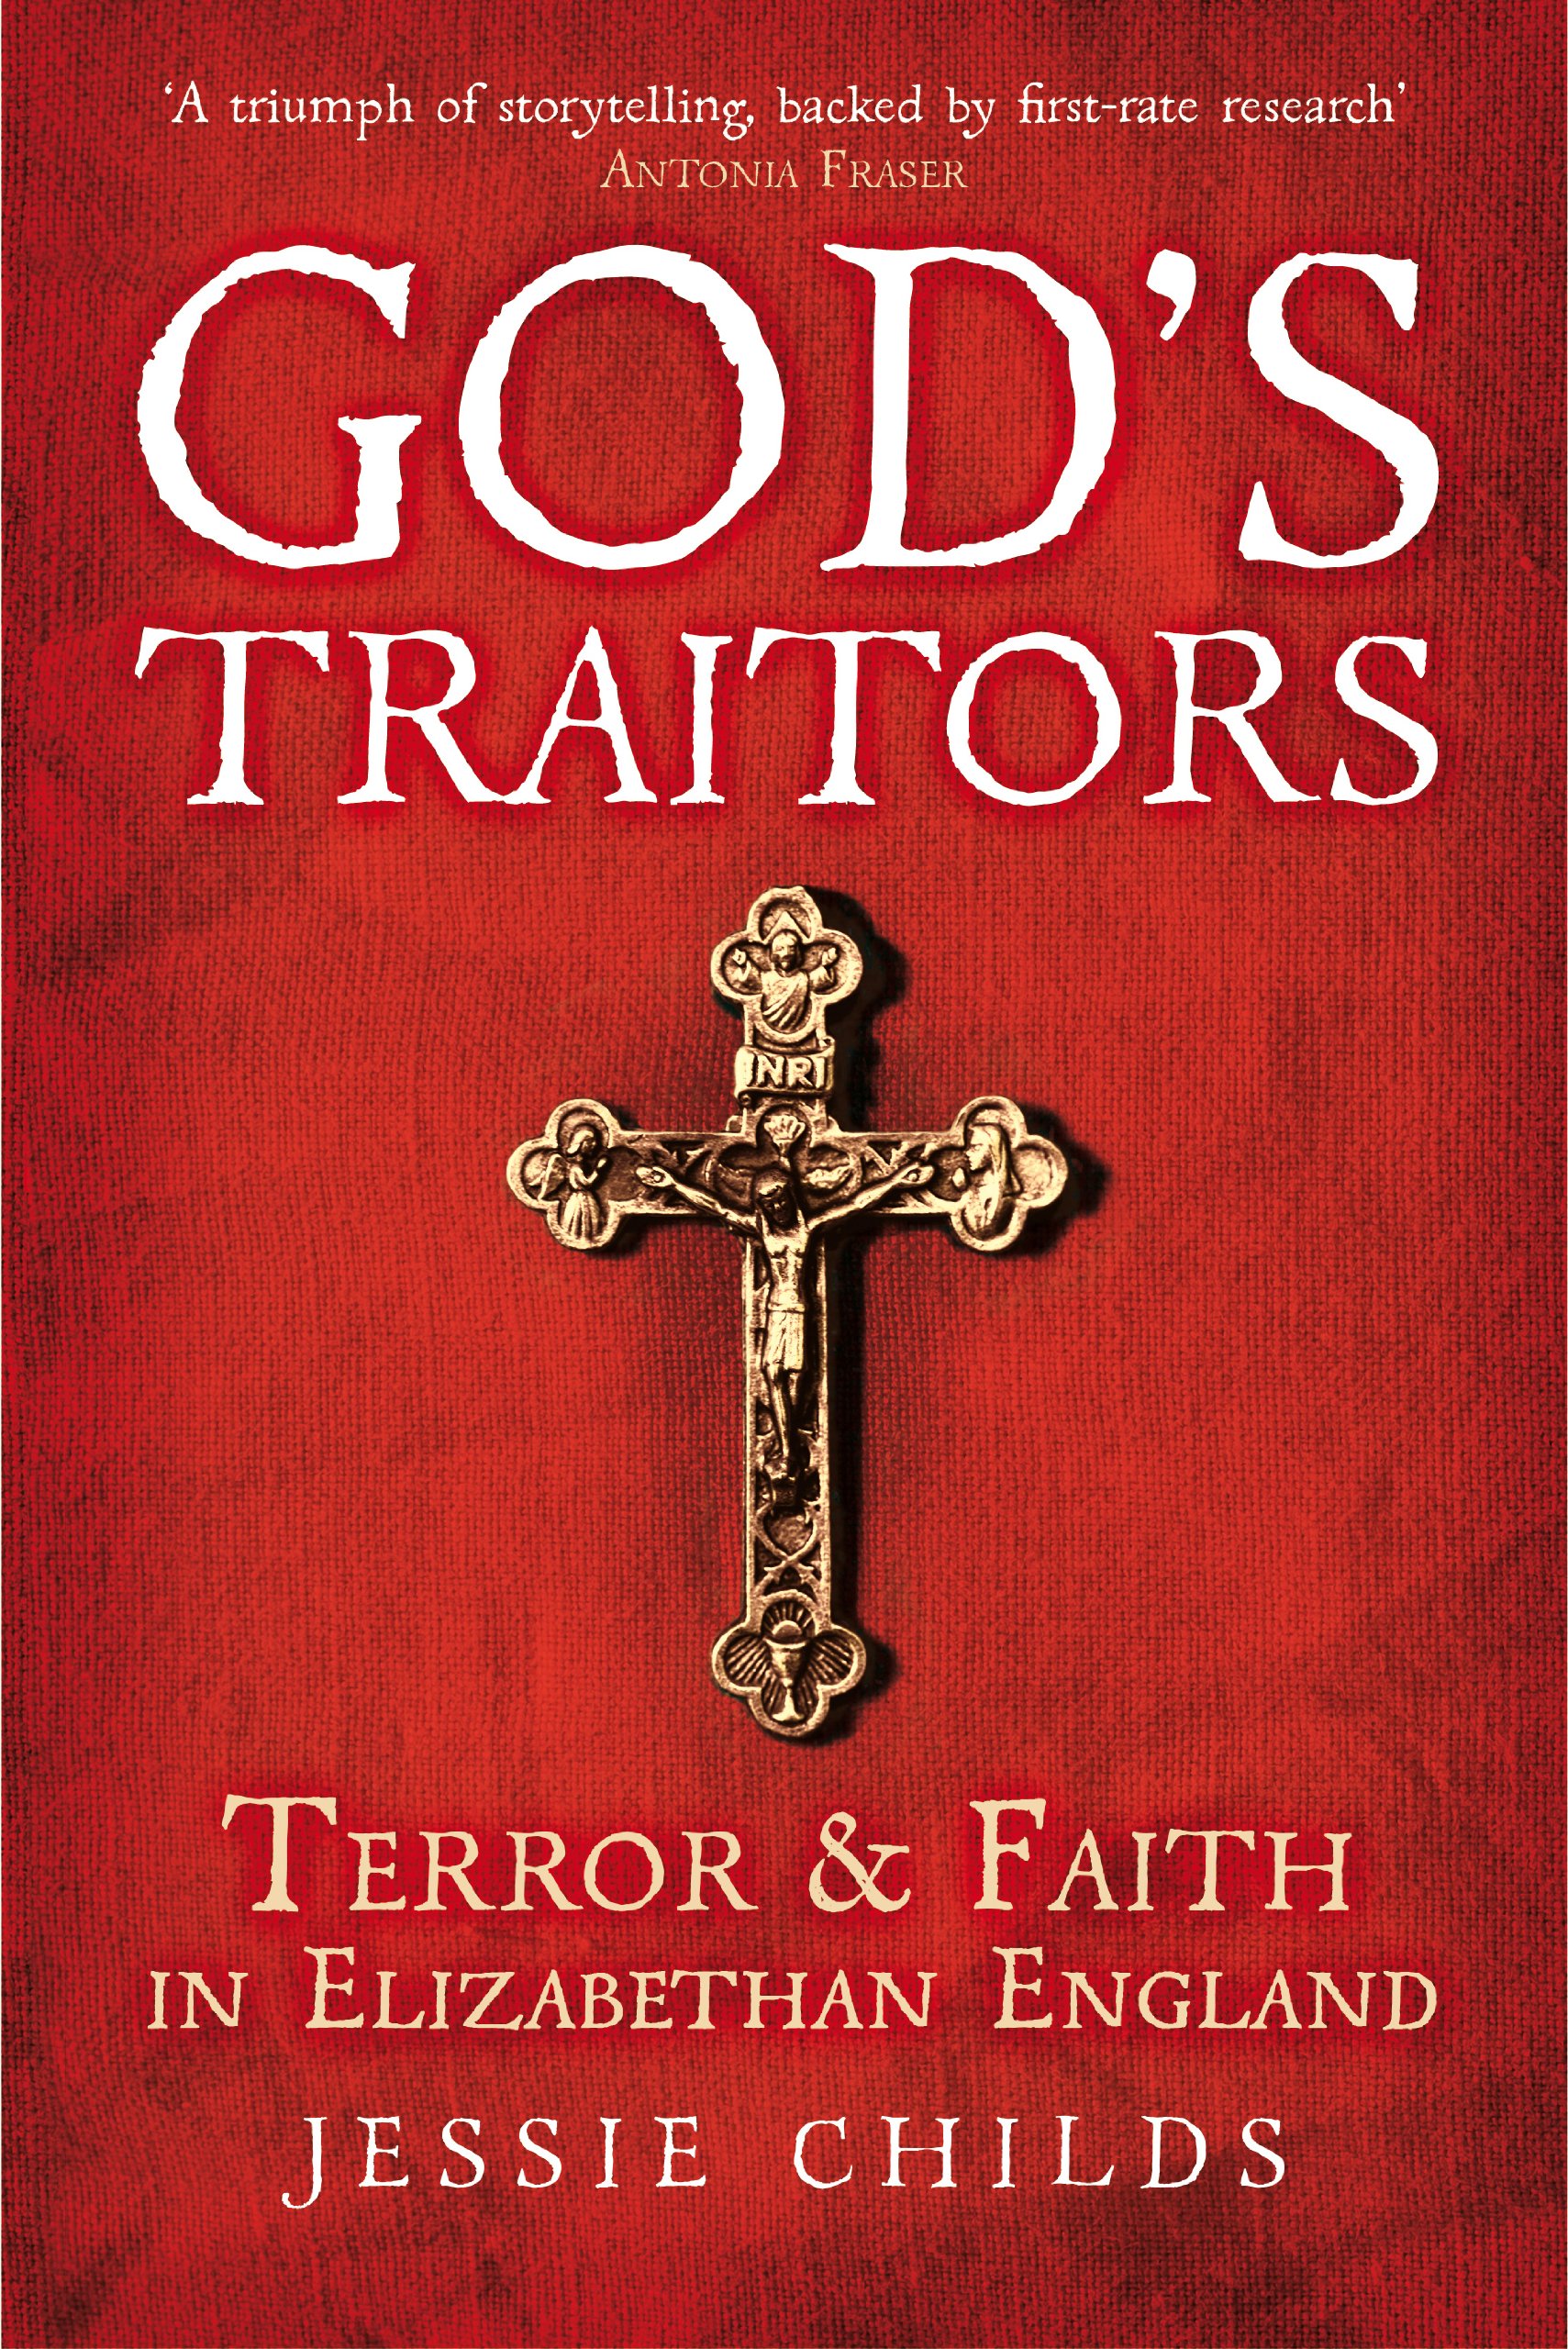 God's Traitors: Terror and Faith in Elizabethan England